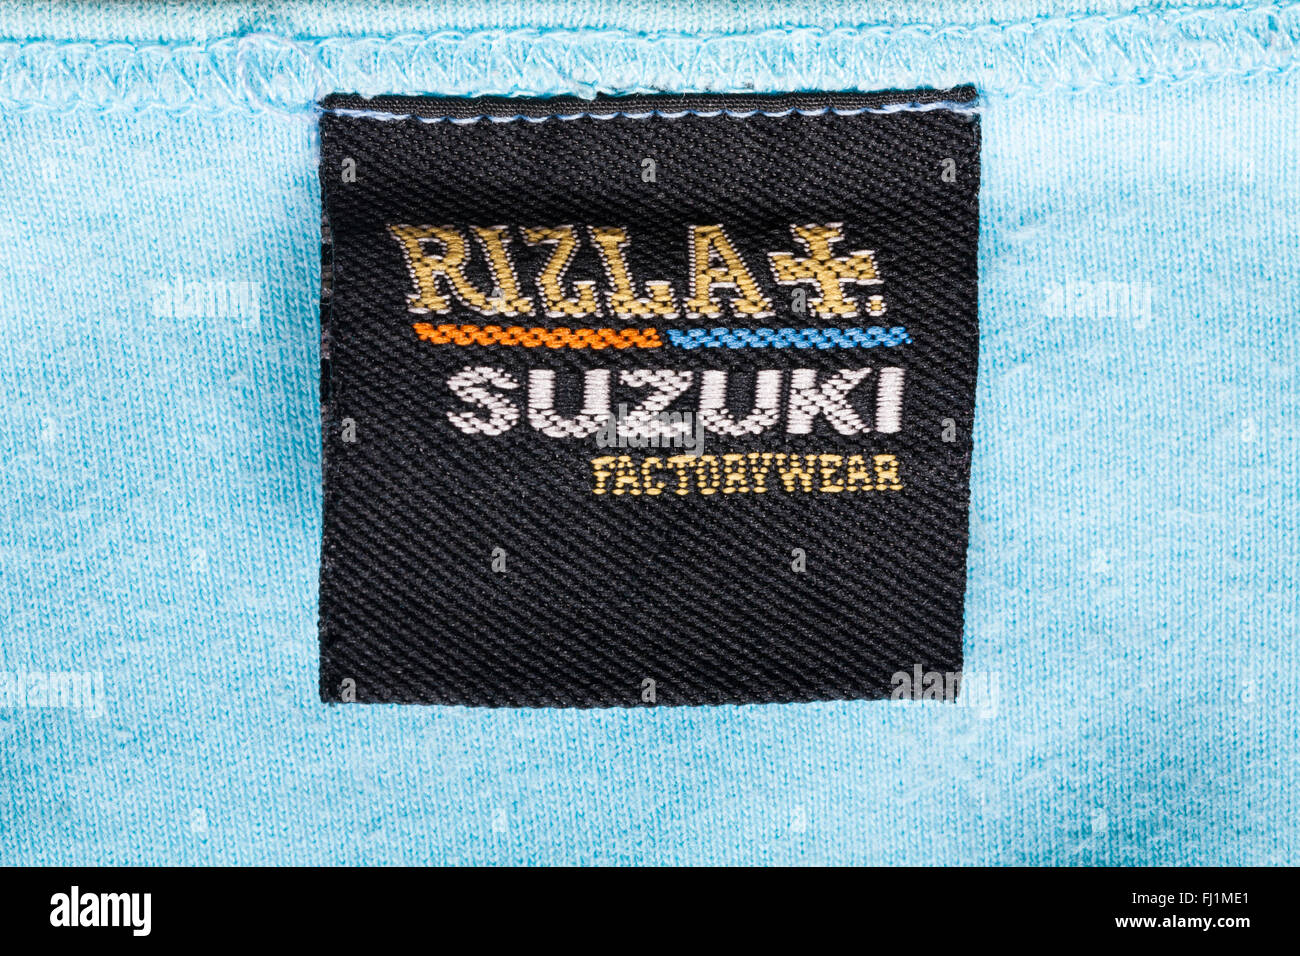 label in Rizla Suzuki Factorywear blue top Stock Photo